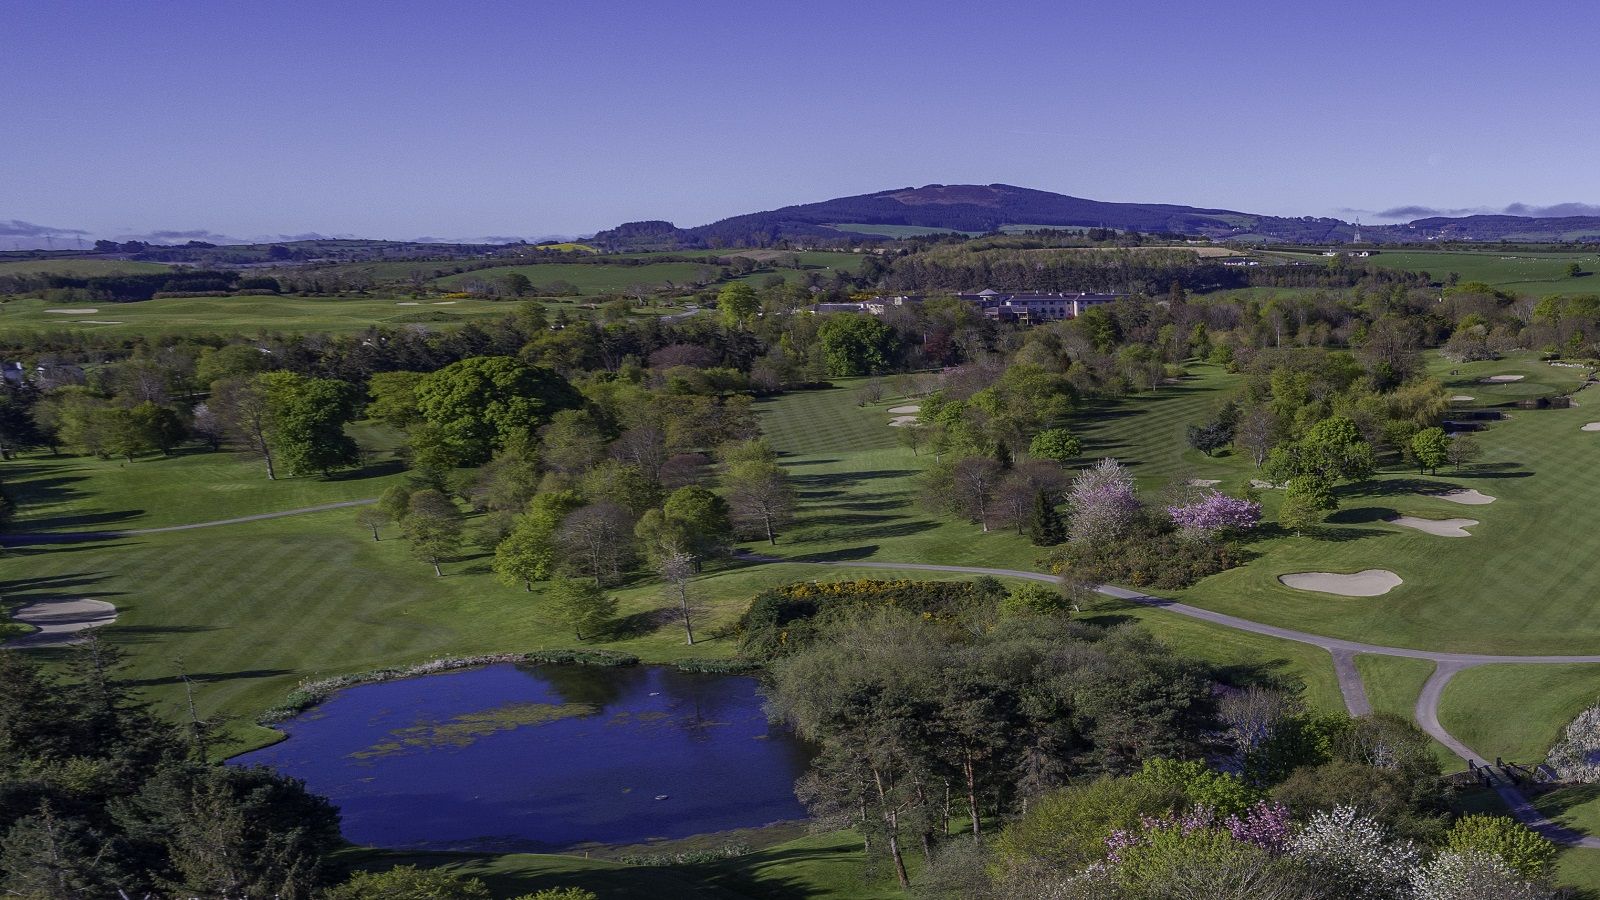 Druids Glen Hotel Golf Resort View 1600 x 900